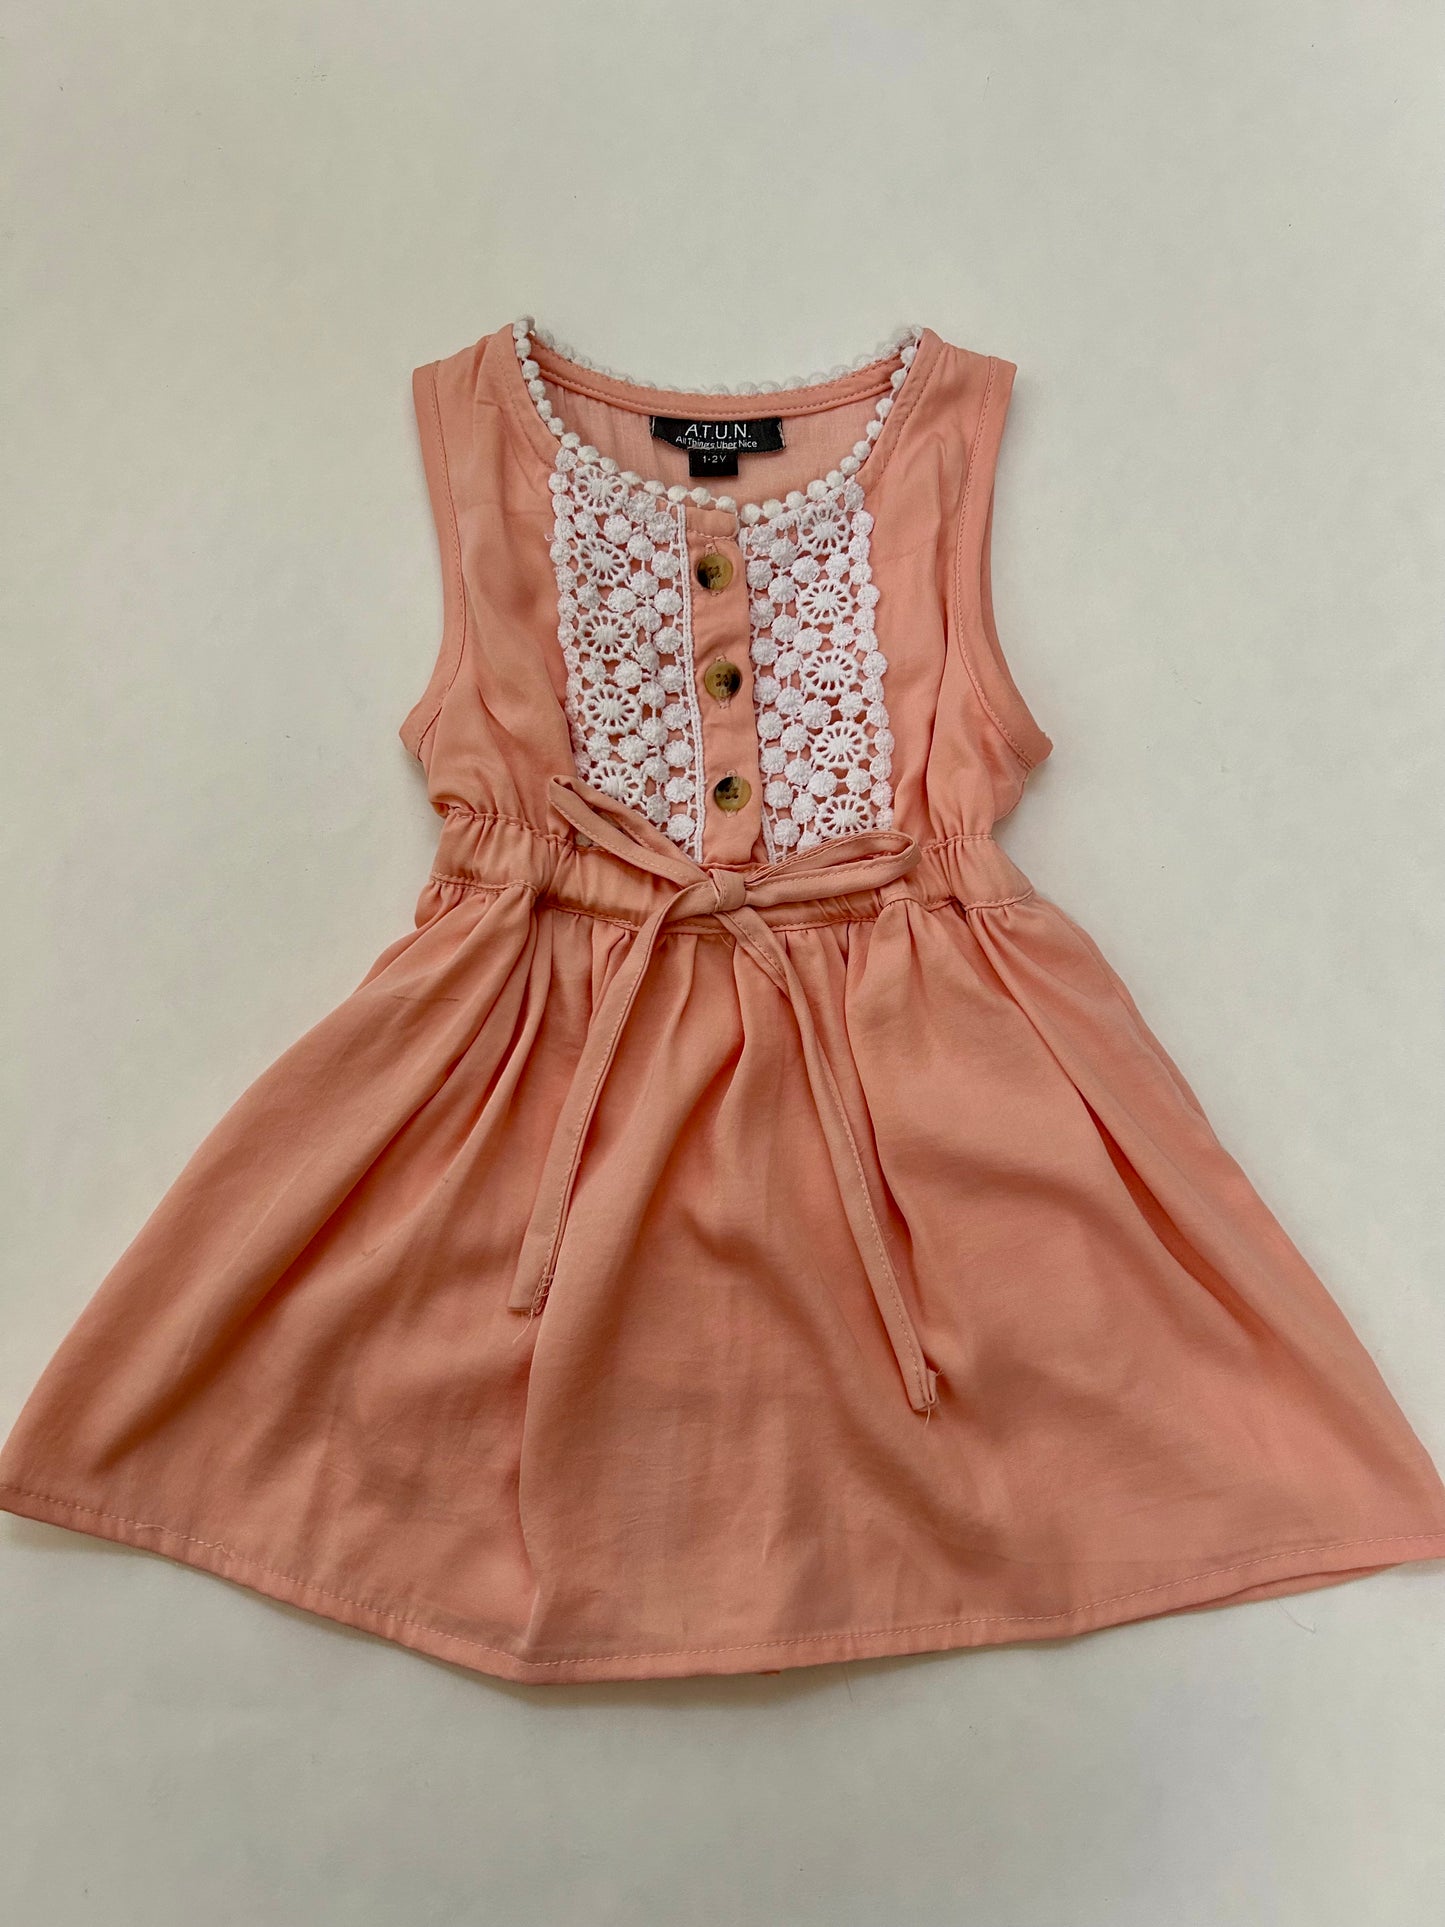 Girls 1-2 year peach Easter dress